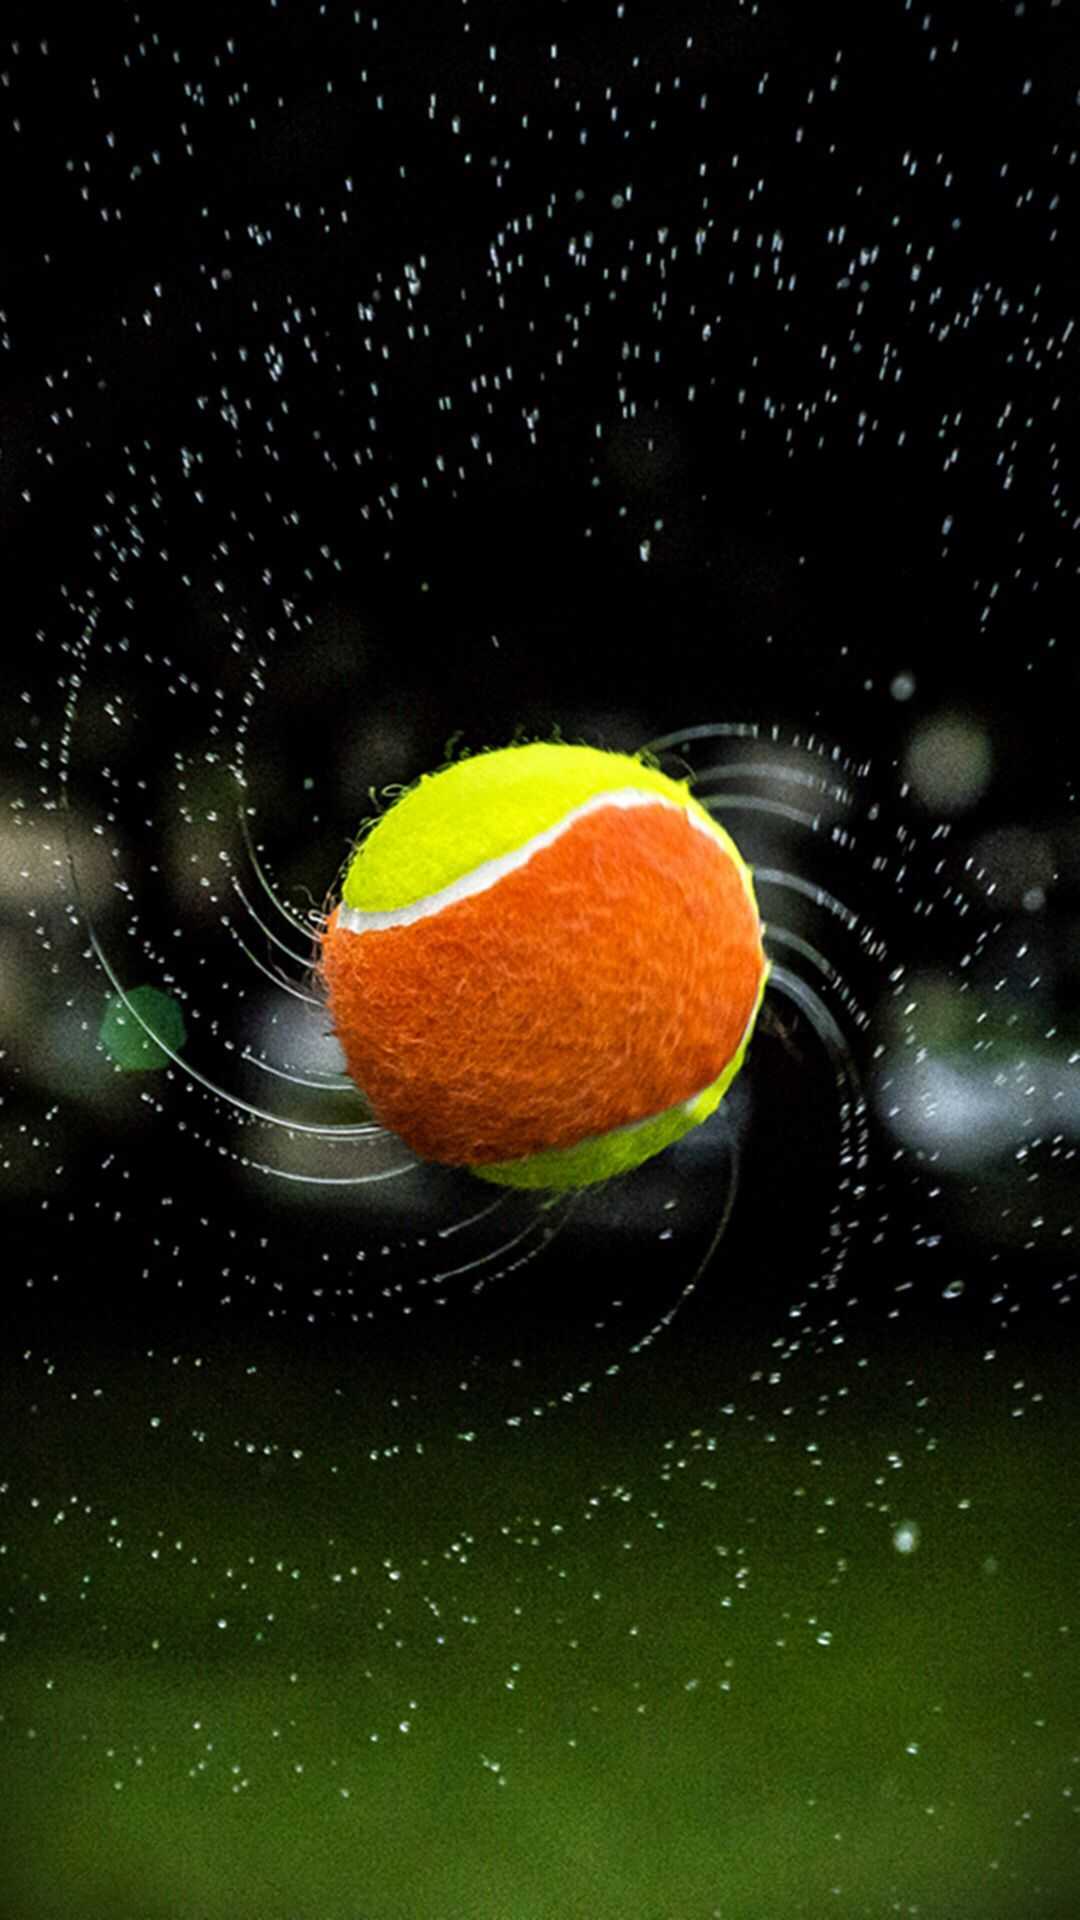 1080p Tennis Wallpaper 1